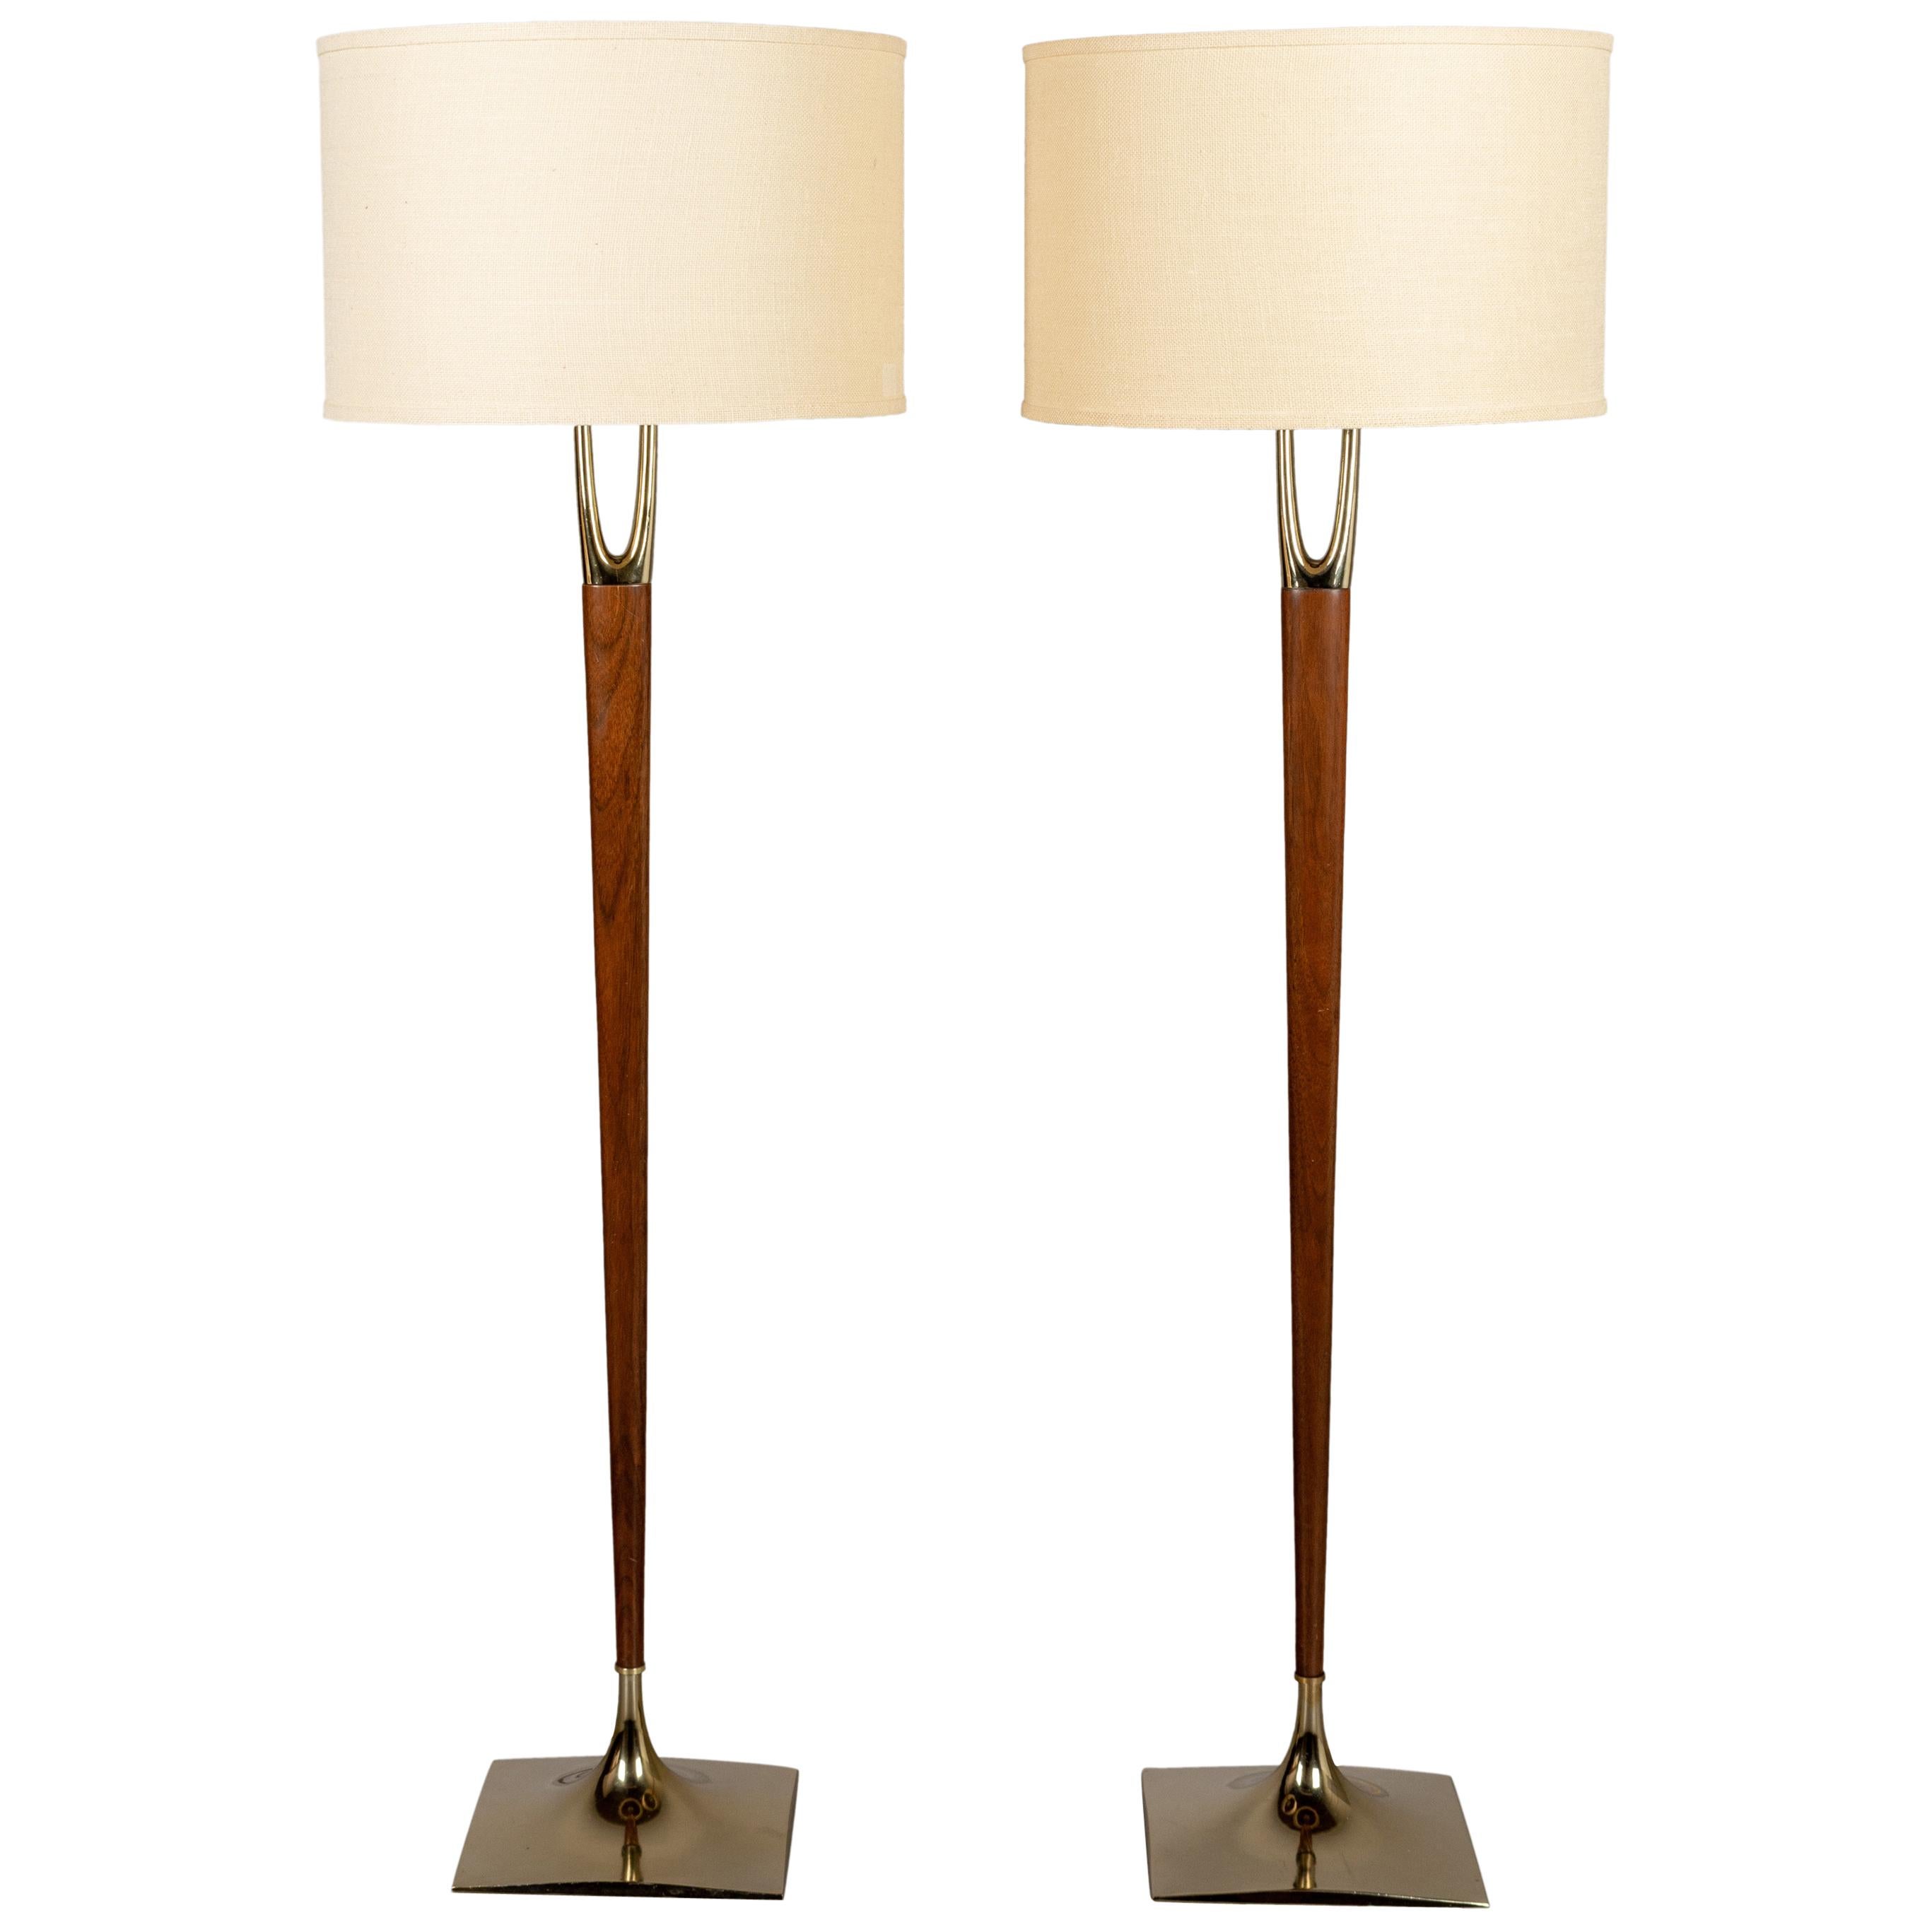 Pair of Mid-Century Modern Laurel Floor Lamps